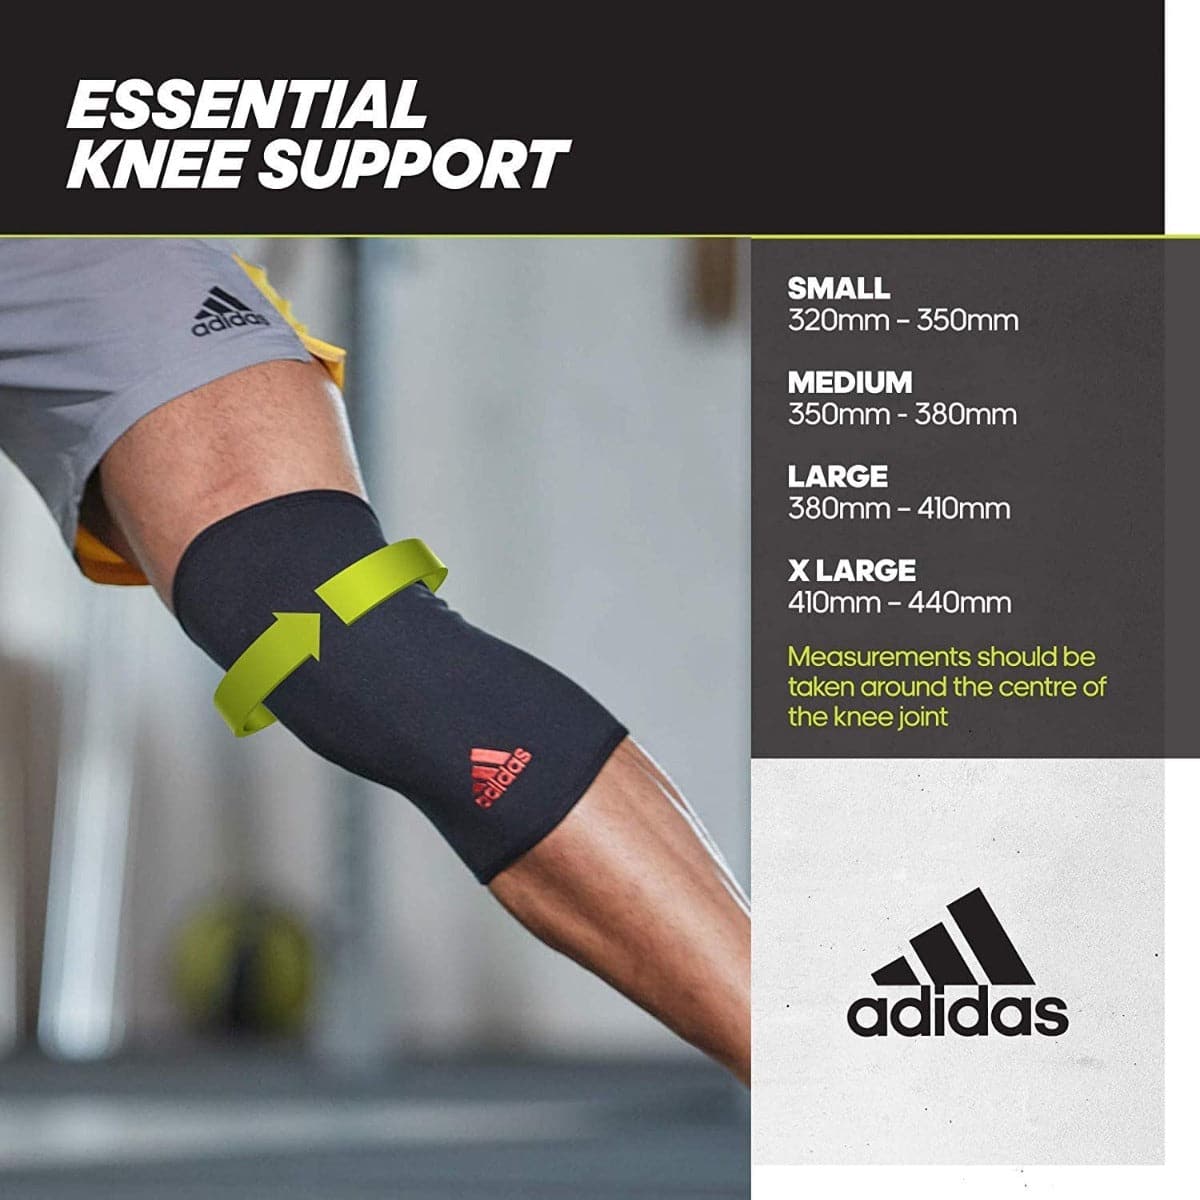 Adidas Essential Knee Support